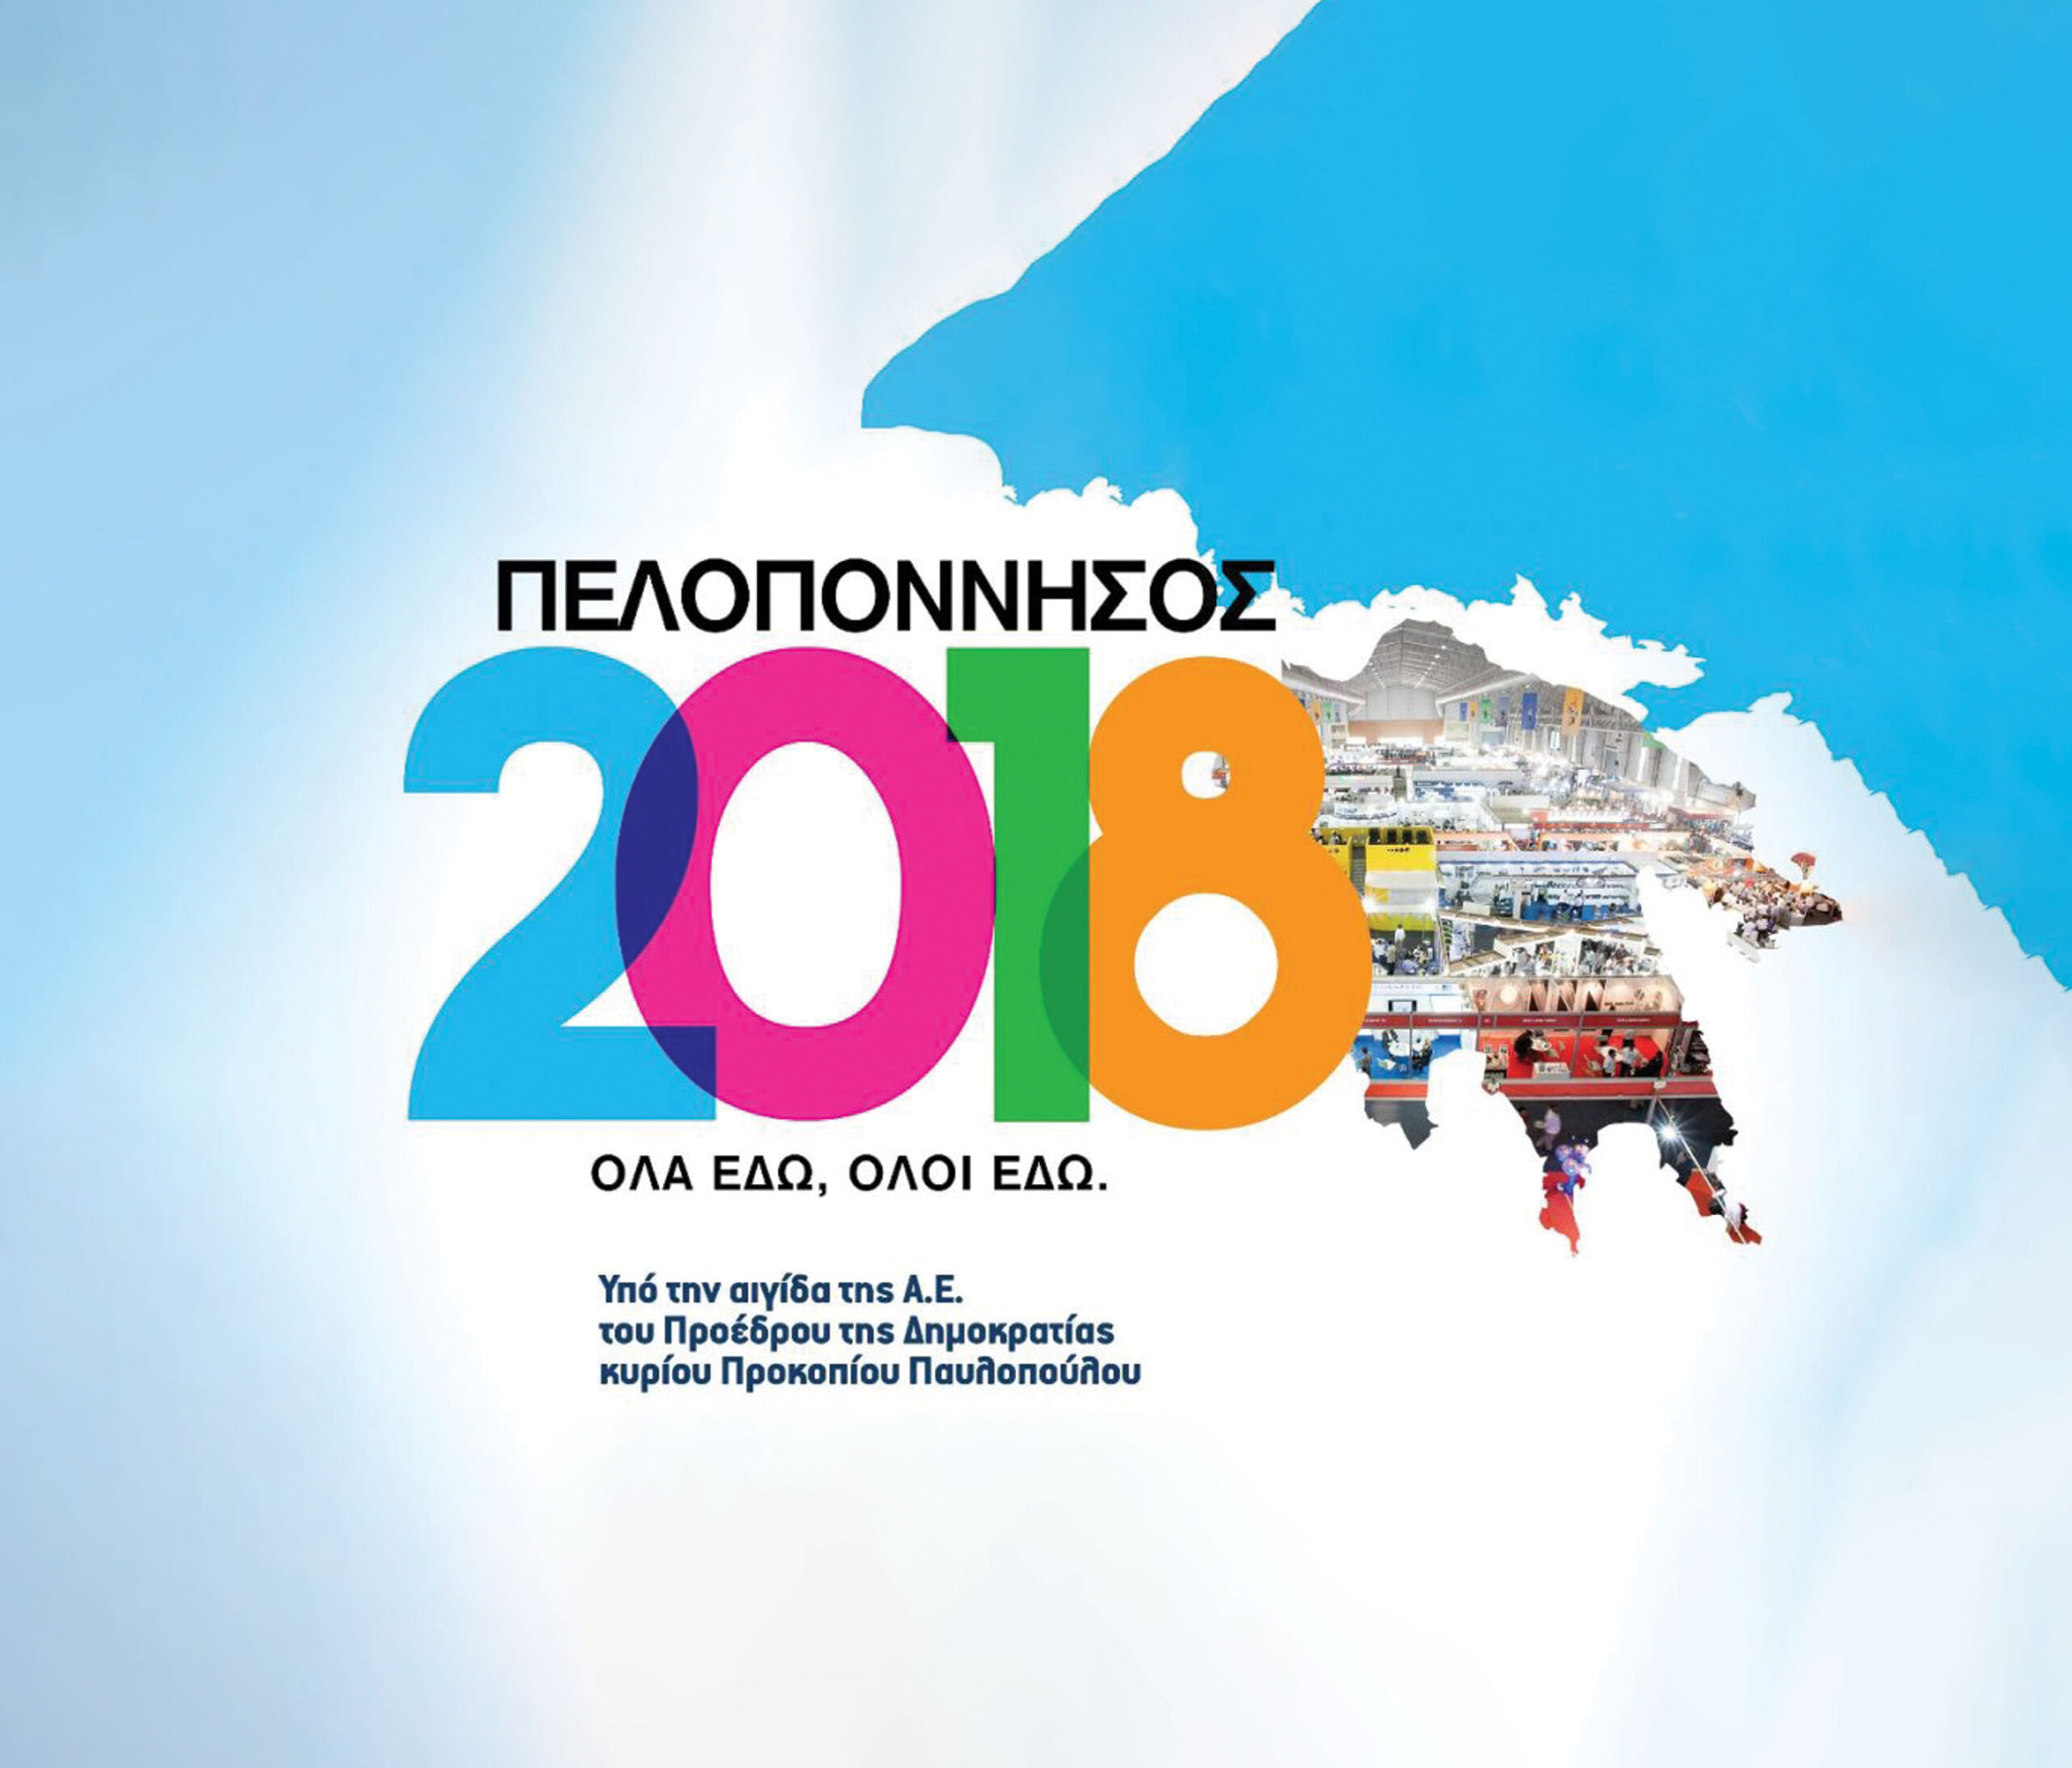 banner peloponnisos2018 blue final 6 part 1000x600 1 1 scaled | "Πελοπόννησος 2018"